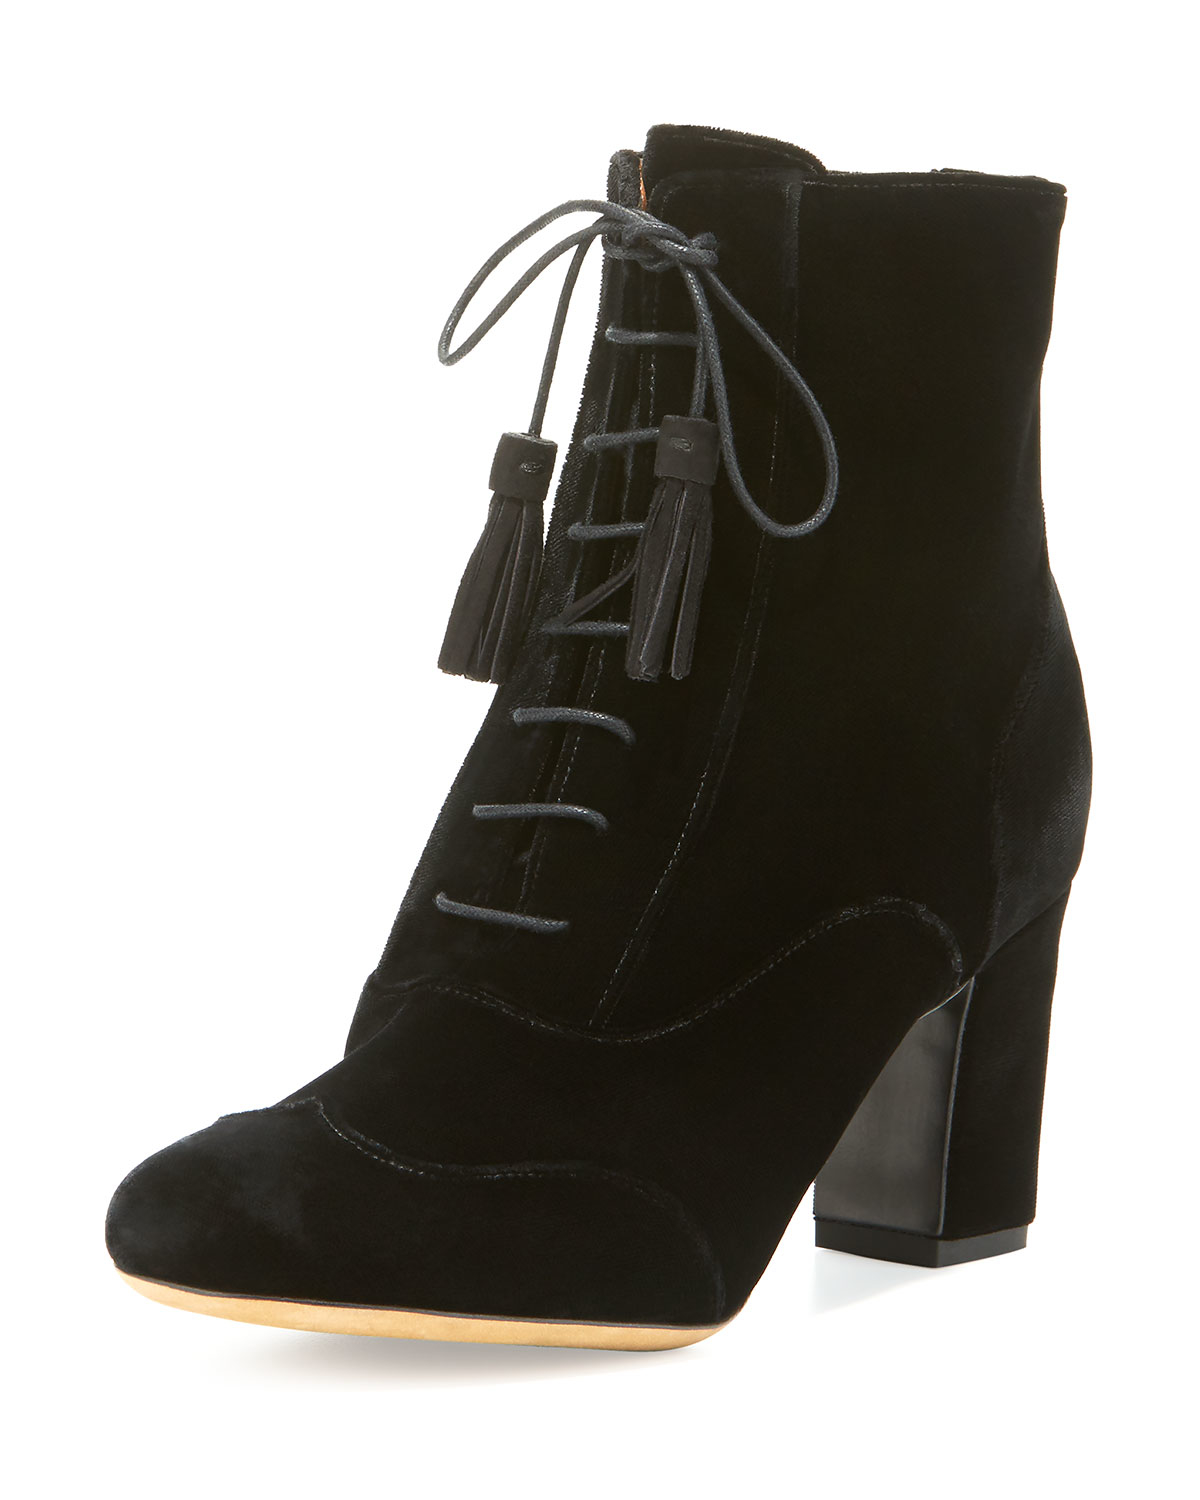 Tabitha simmons Afton Velvet Ankle Boots in Black | Lyst